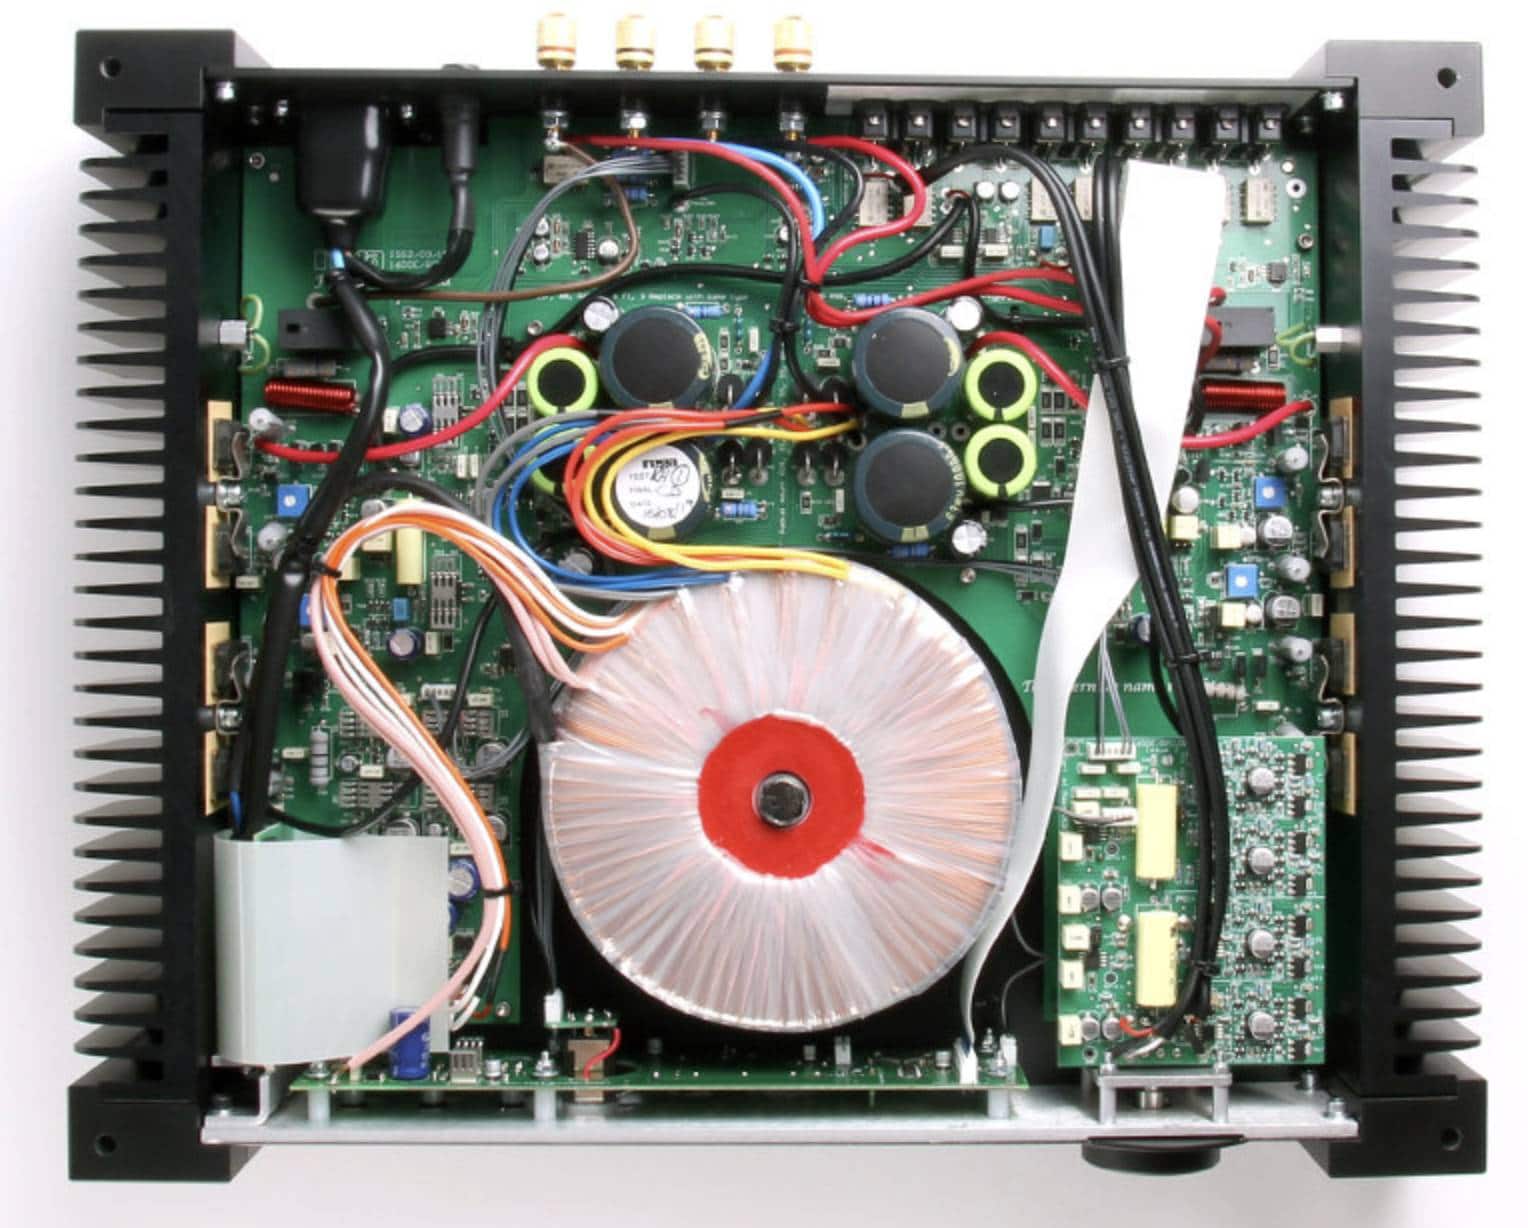 Aethos integrated amplifier from Rega